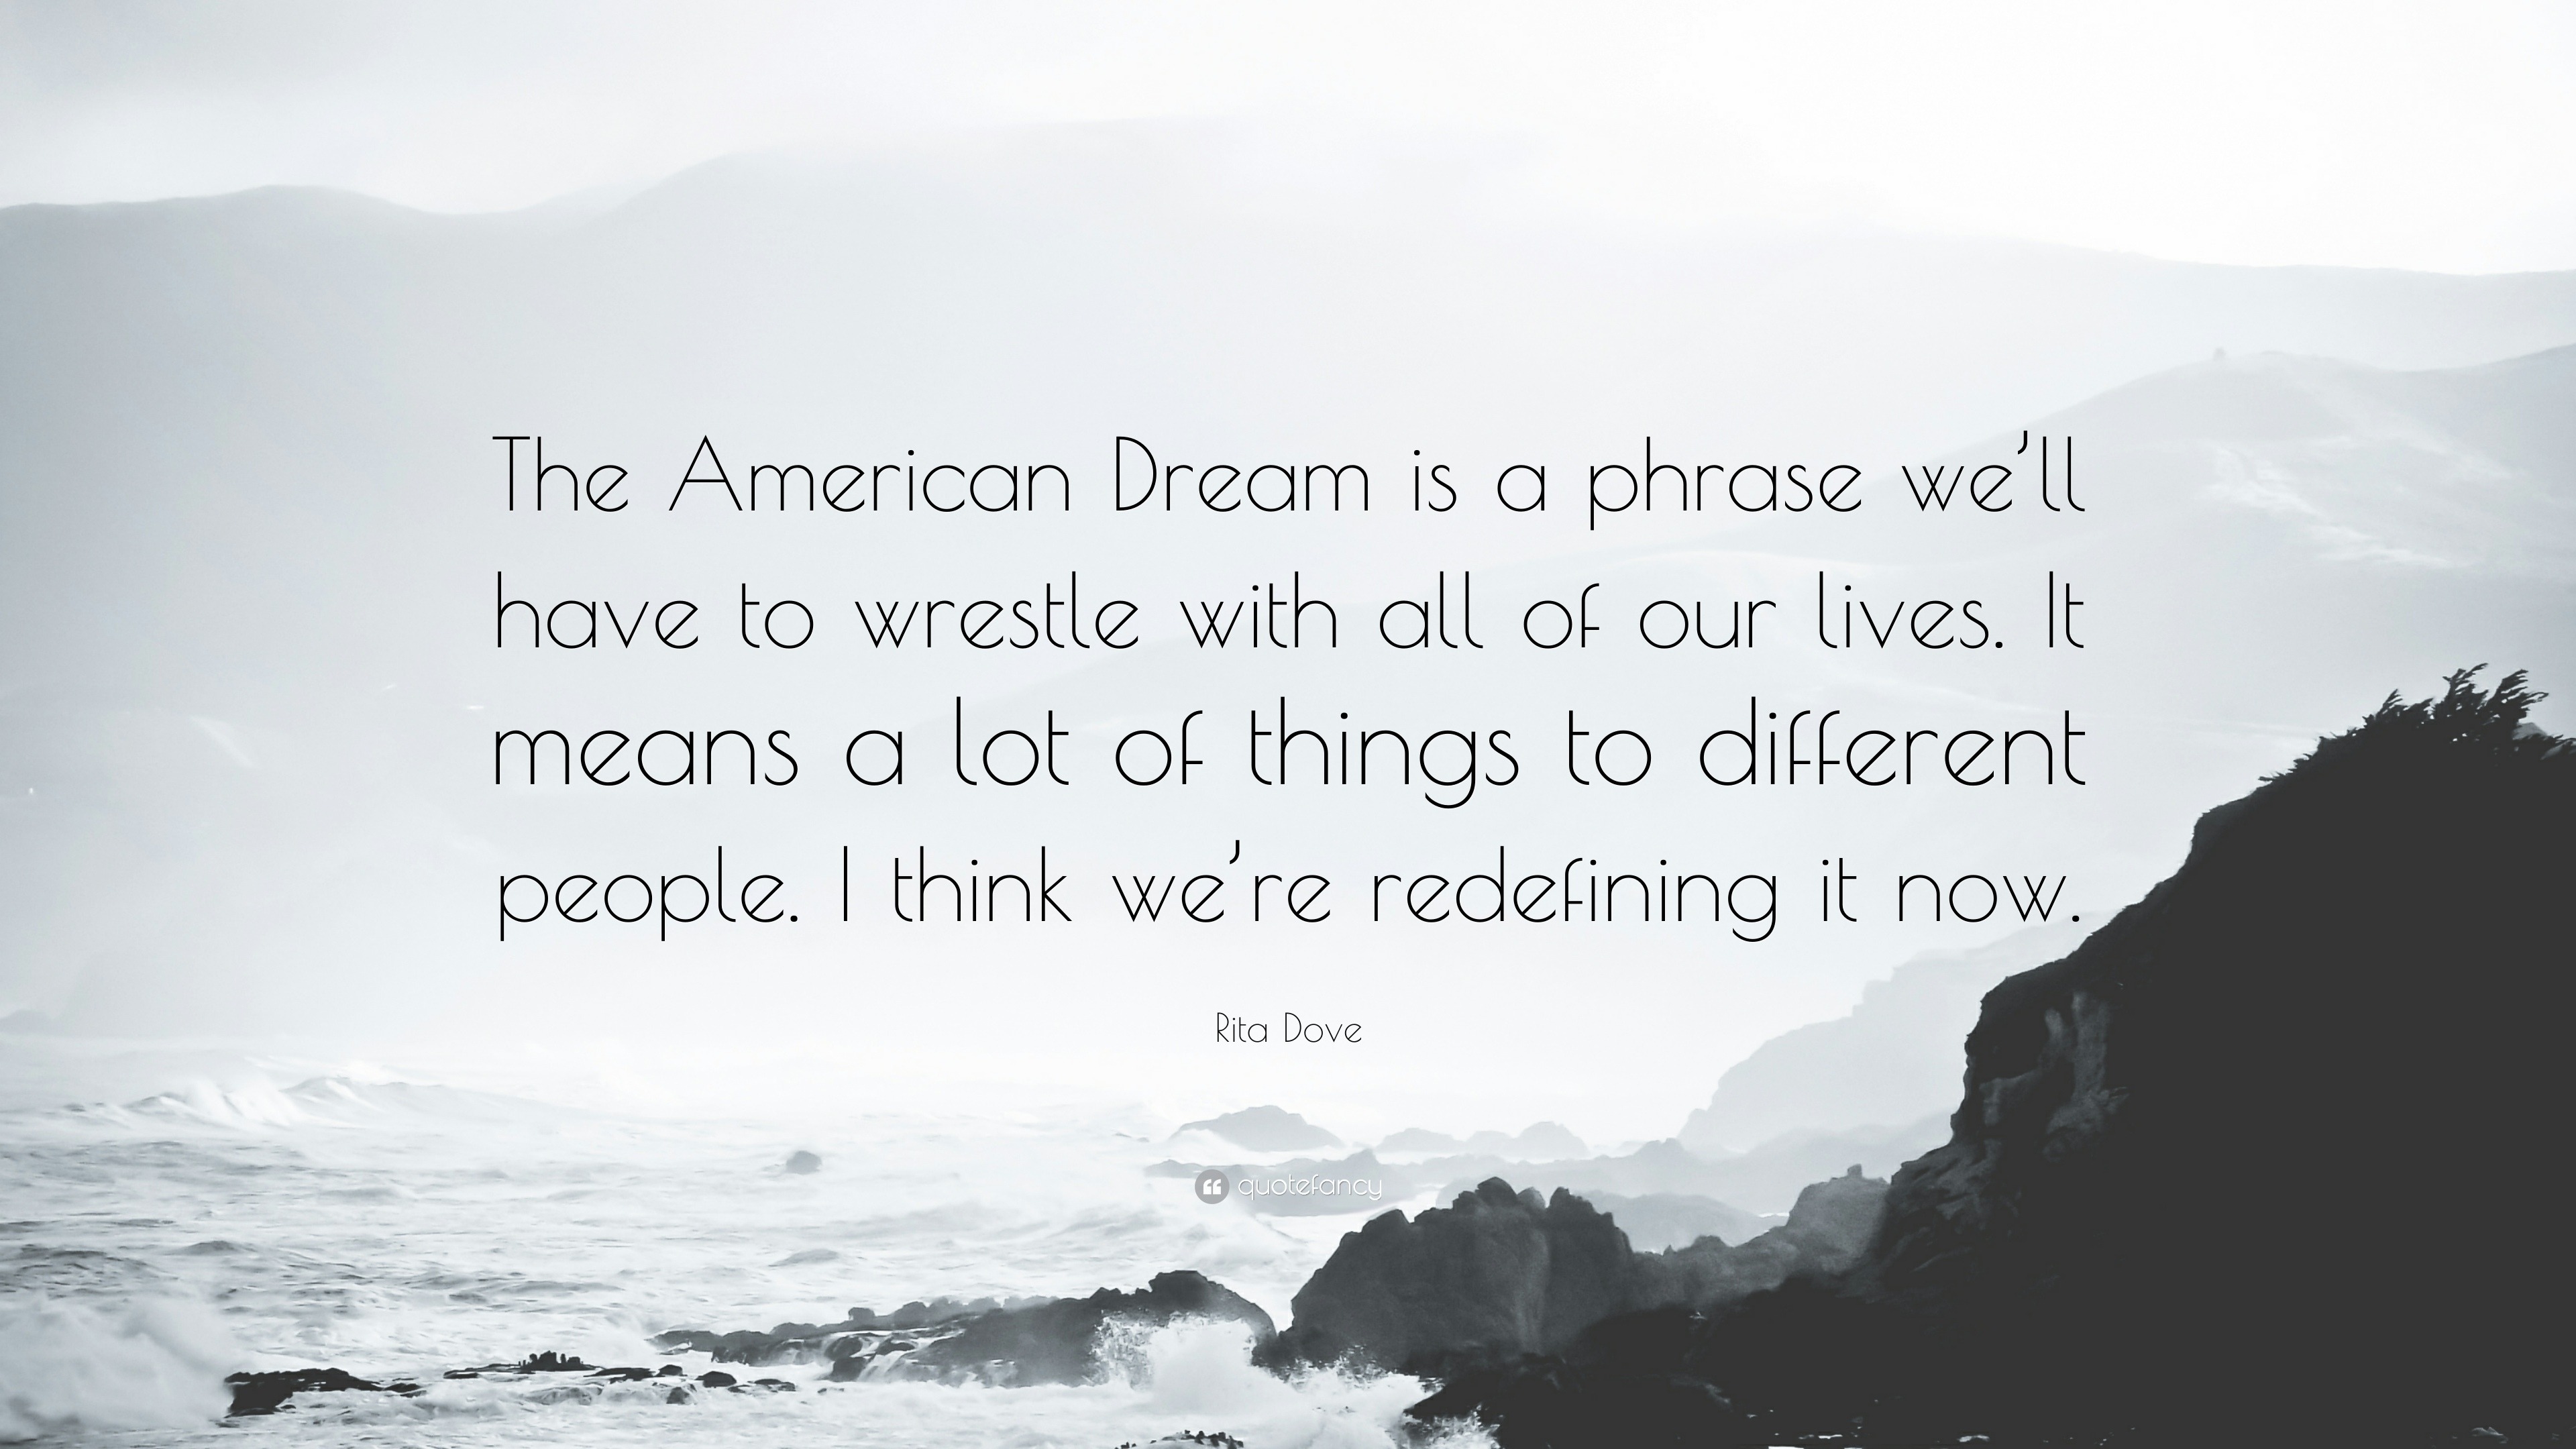 Rita Dove Quote: “The American Dream is a phrase we’ll have to wrestle ...